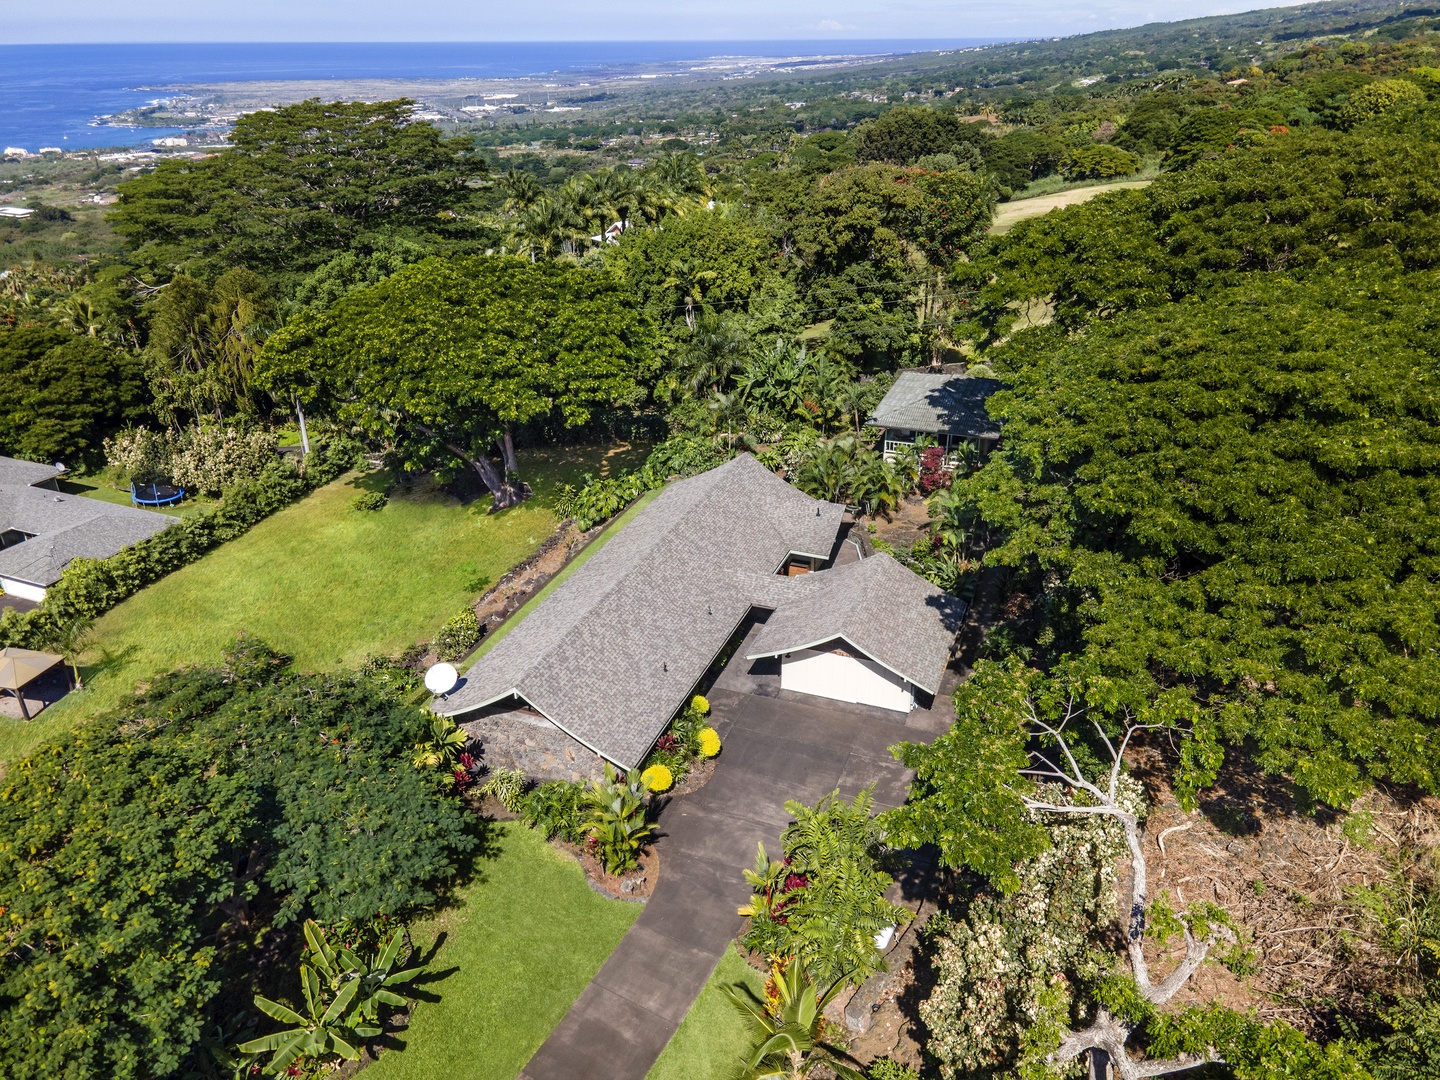 Kailua-Kona Vacation Rentals, Hale Joli - Aerial view